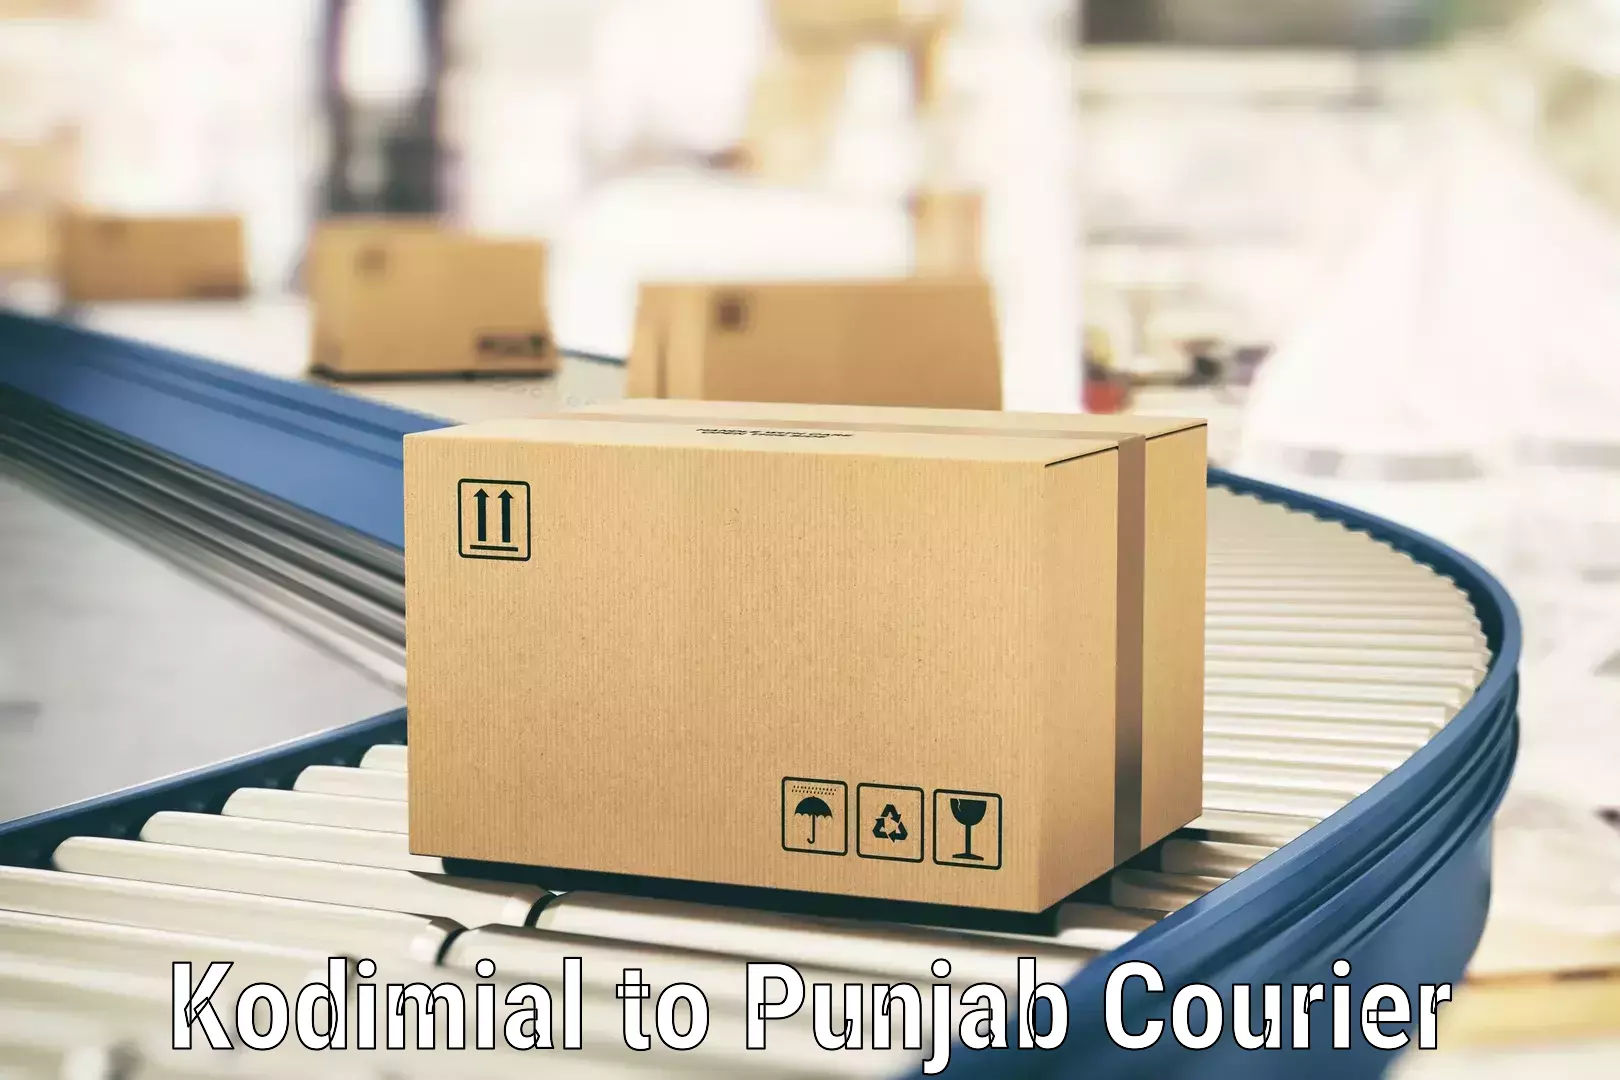 Professional courier handling Kodimial to Zirakpur